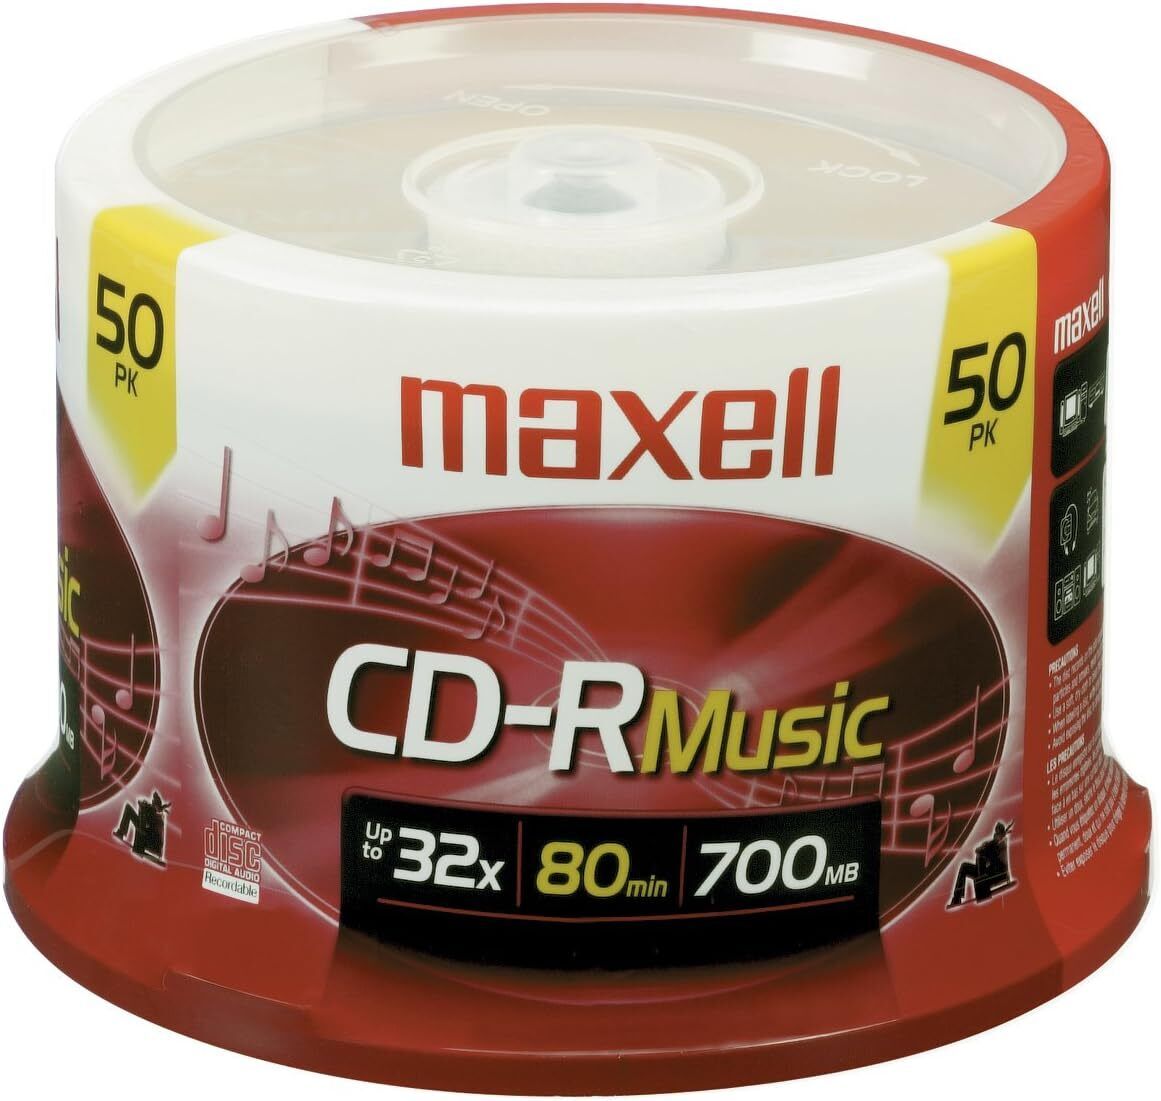  625156 - Cdr80mu50pk Cd-r De Musica De 80 Minutos (Eje De 50 Unidades) Rojo